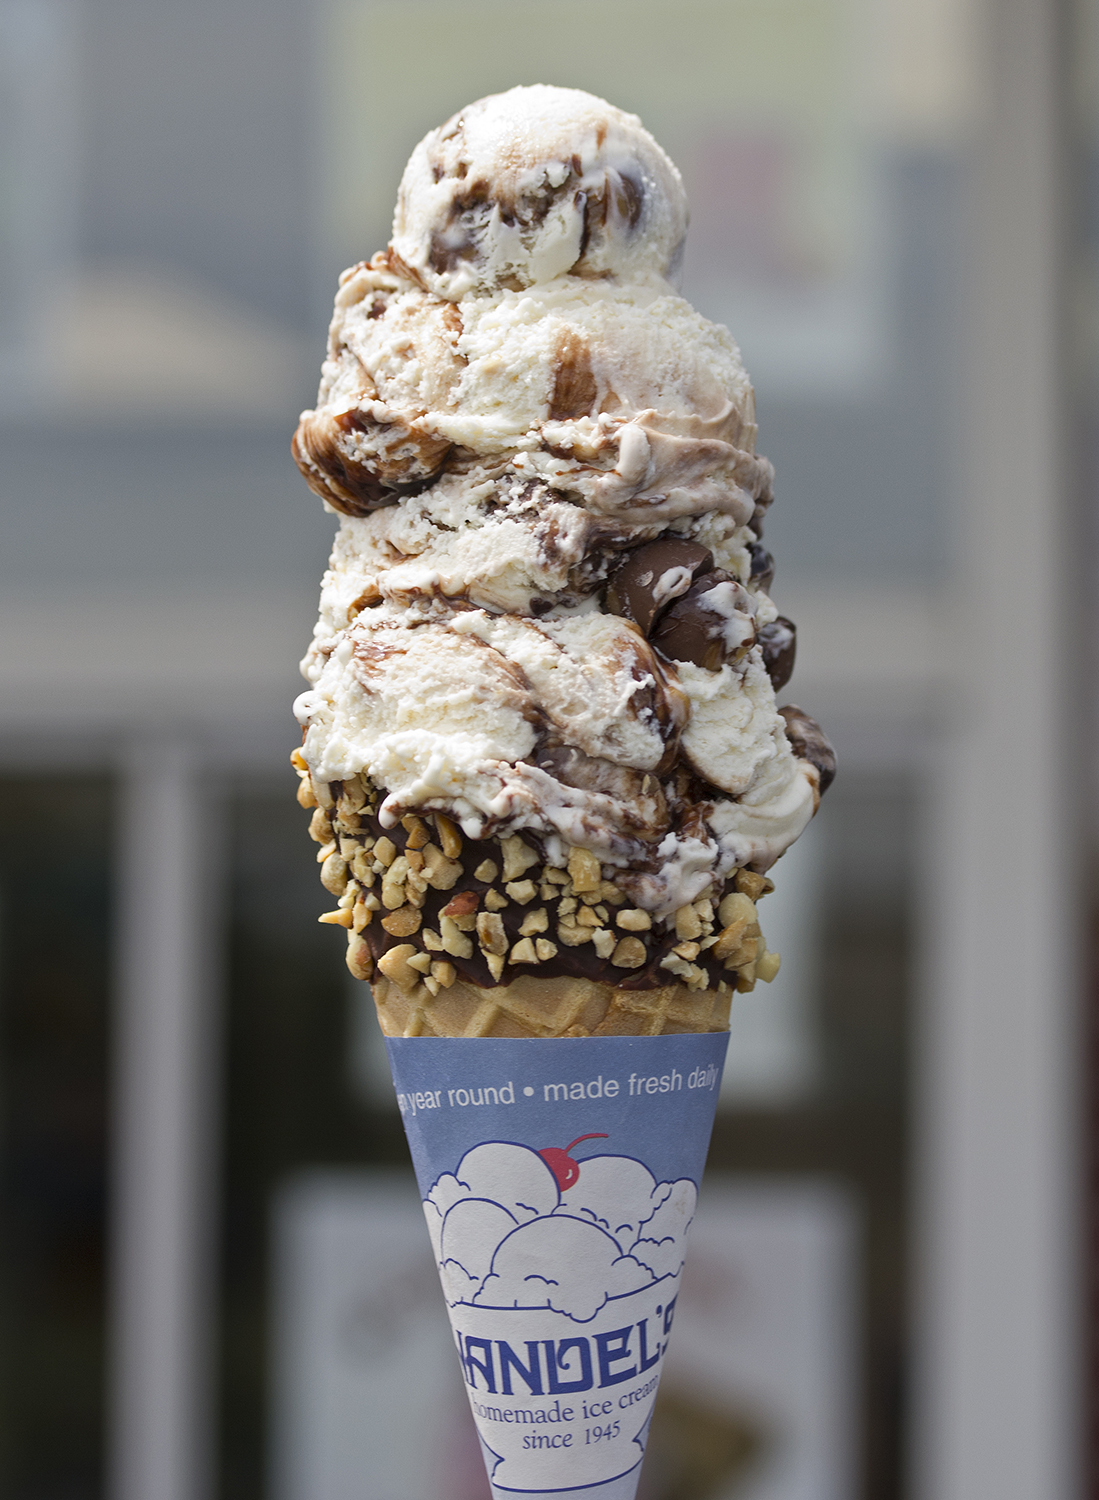 Handel's Homemade Ice Cream Comes to Newport Beach - Newport Beach News